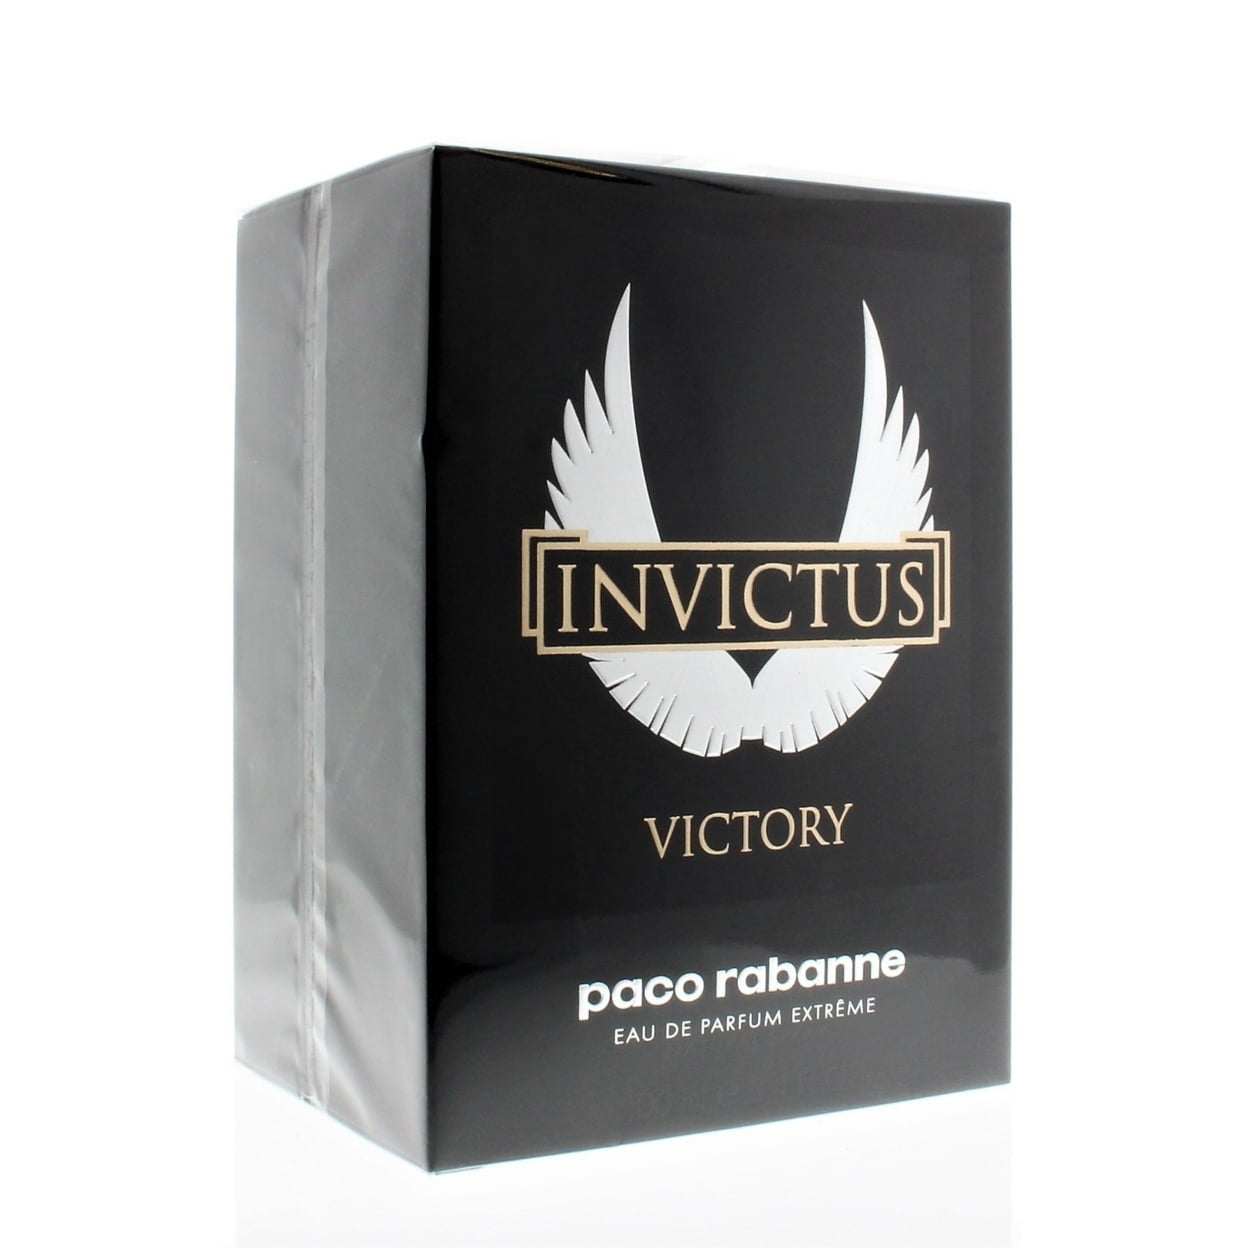 INVICTUS VICTORY * Paco Rabanne 3.4 oz / 100 ml EDP Extreme Men Cologne